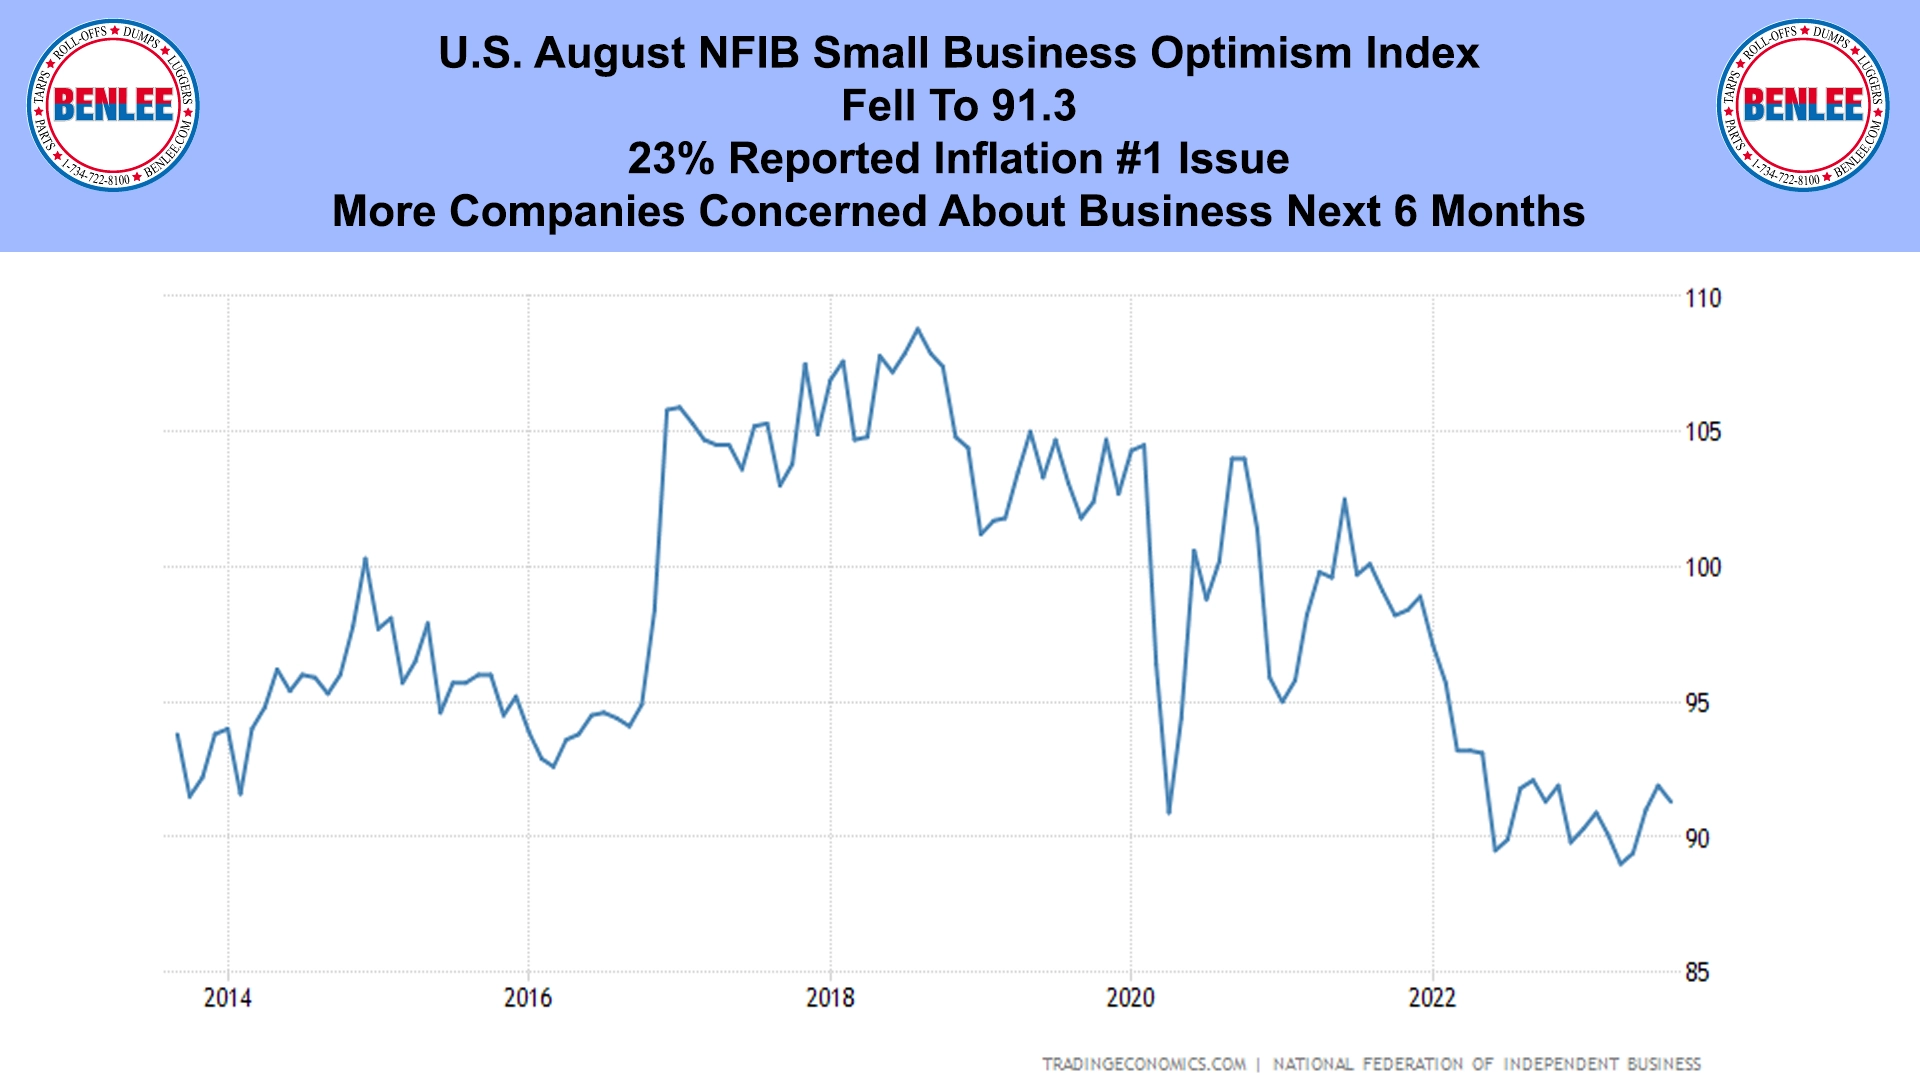 U.S. August NFIB Small Business Optimism Index